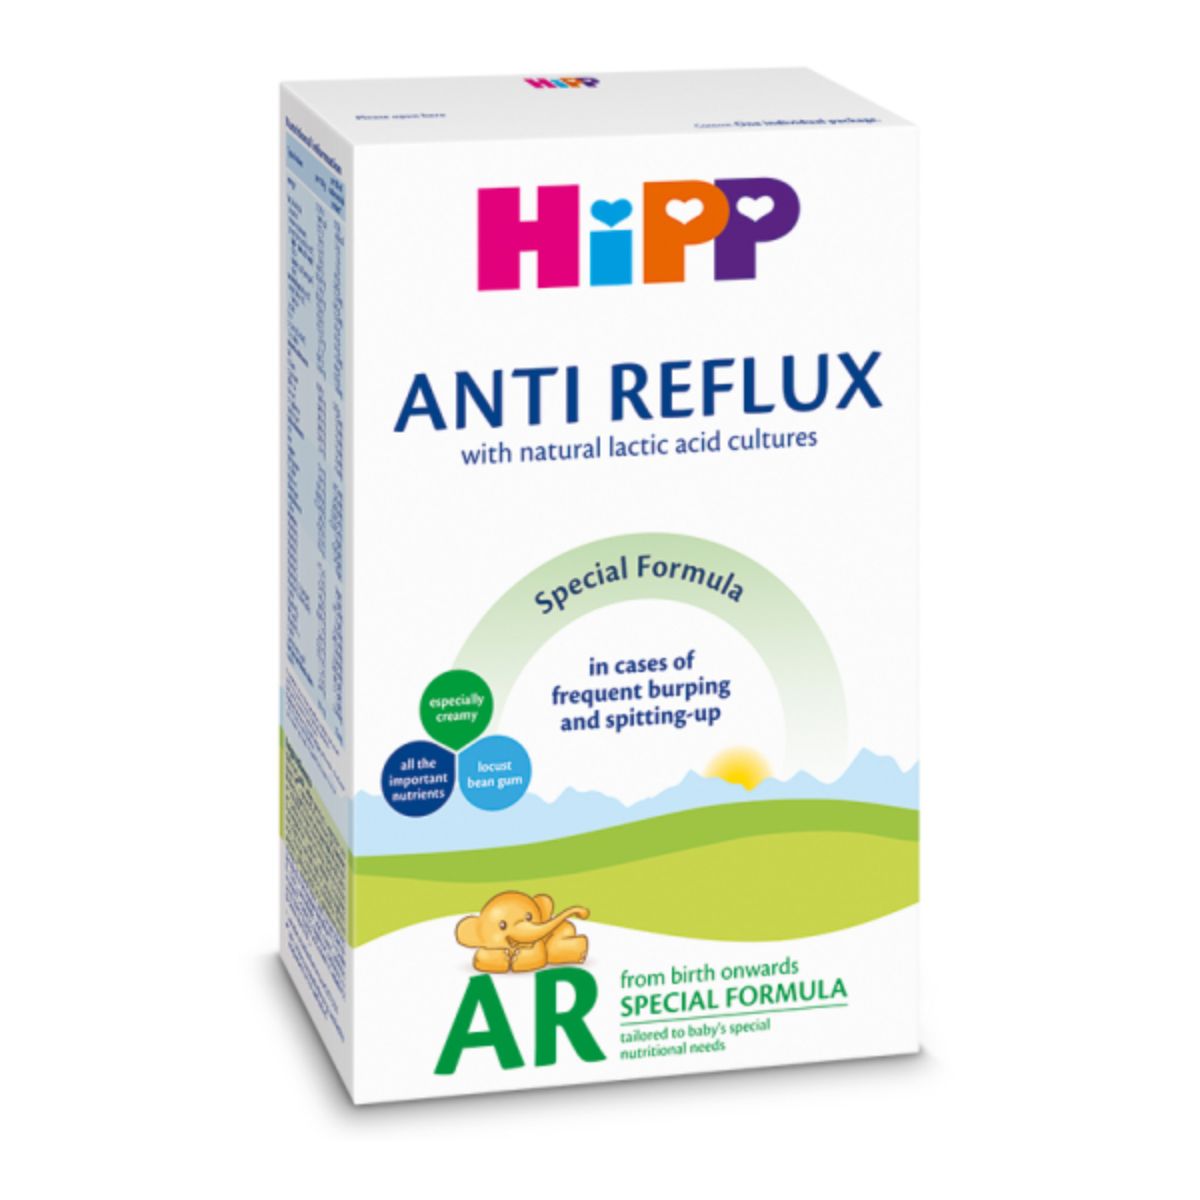 Lapte praf anti-reflux formula speciala Hipp, 300 g Lapte praf 2023-09-25